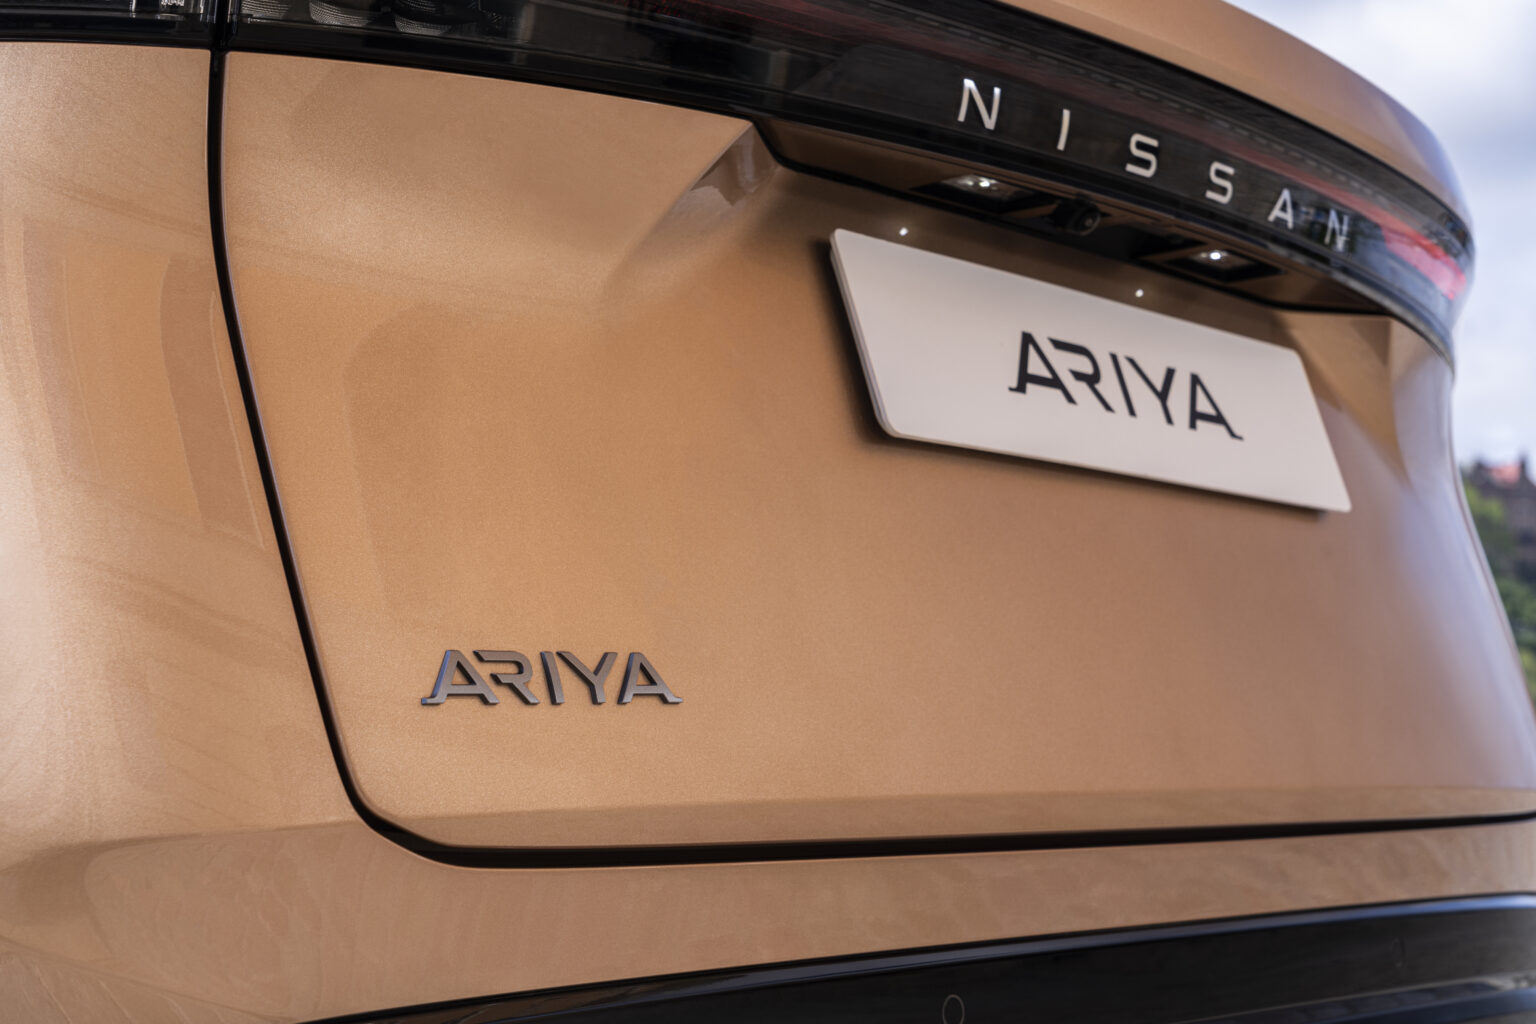 2023 Nissan Ariya Exterior Image 35